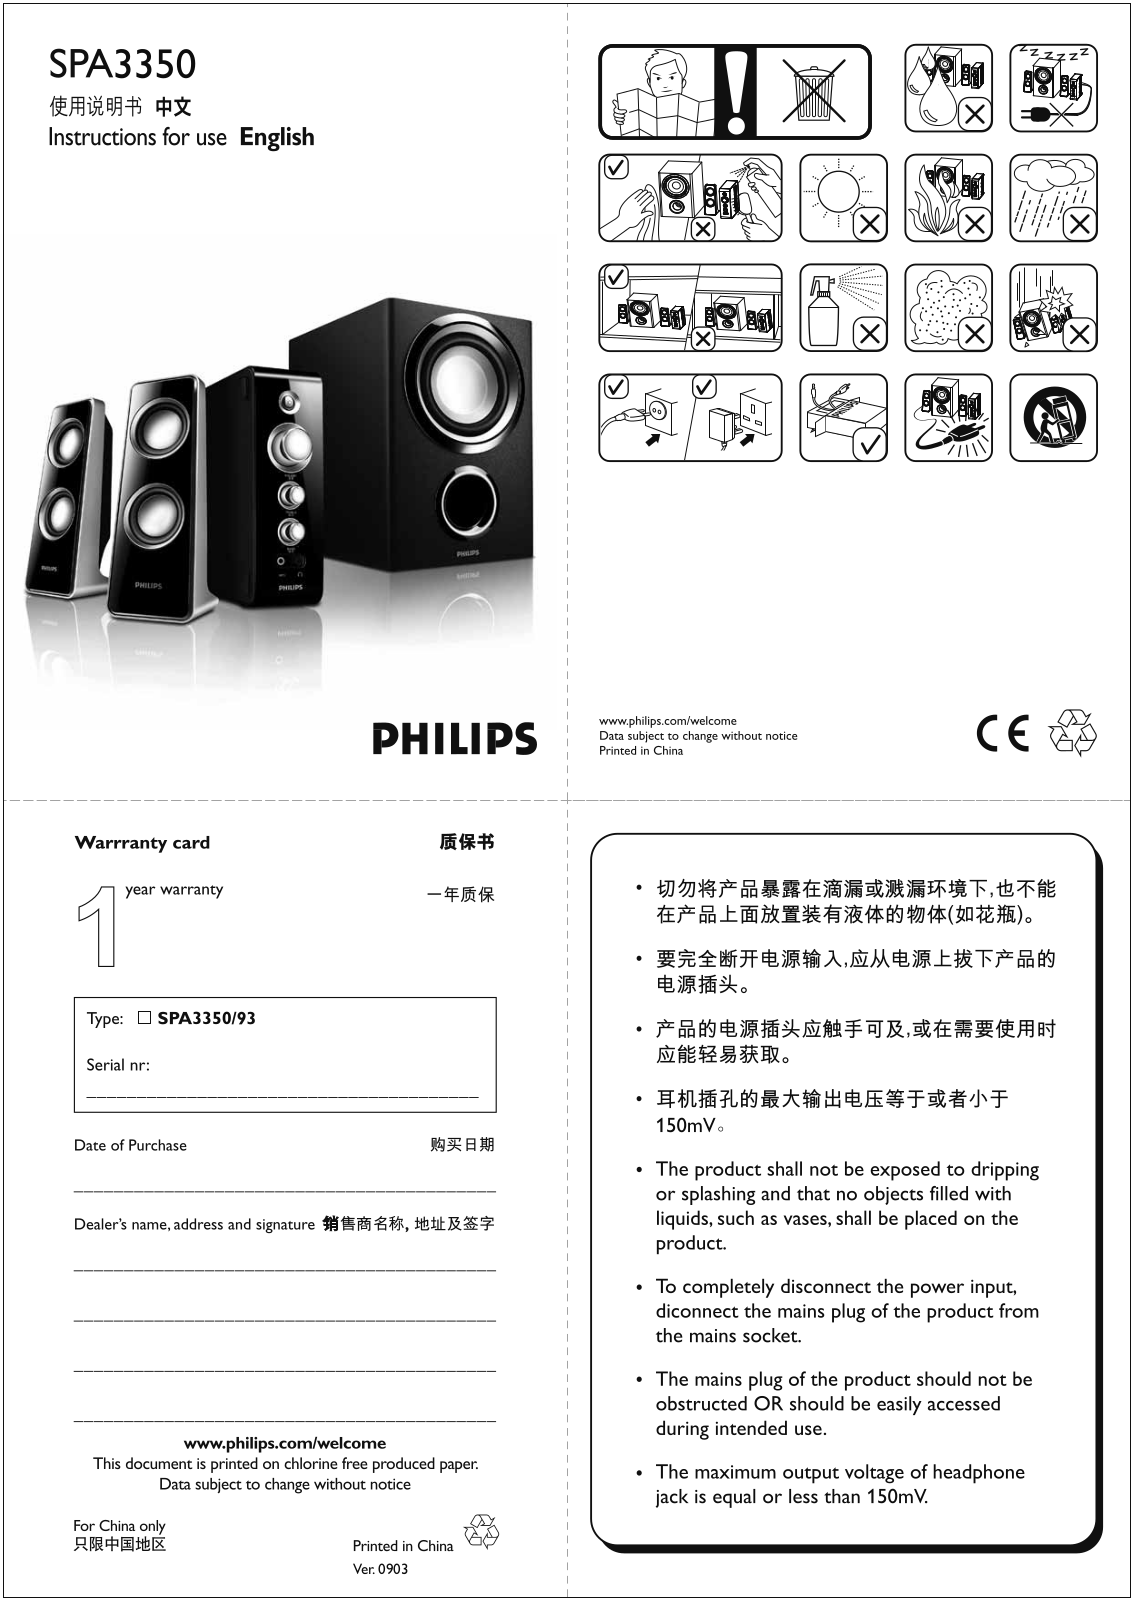 Philips SPA3350 User Manual